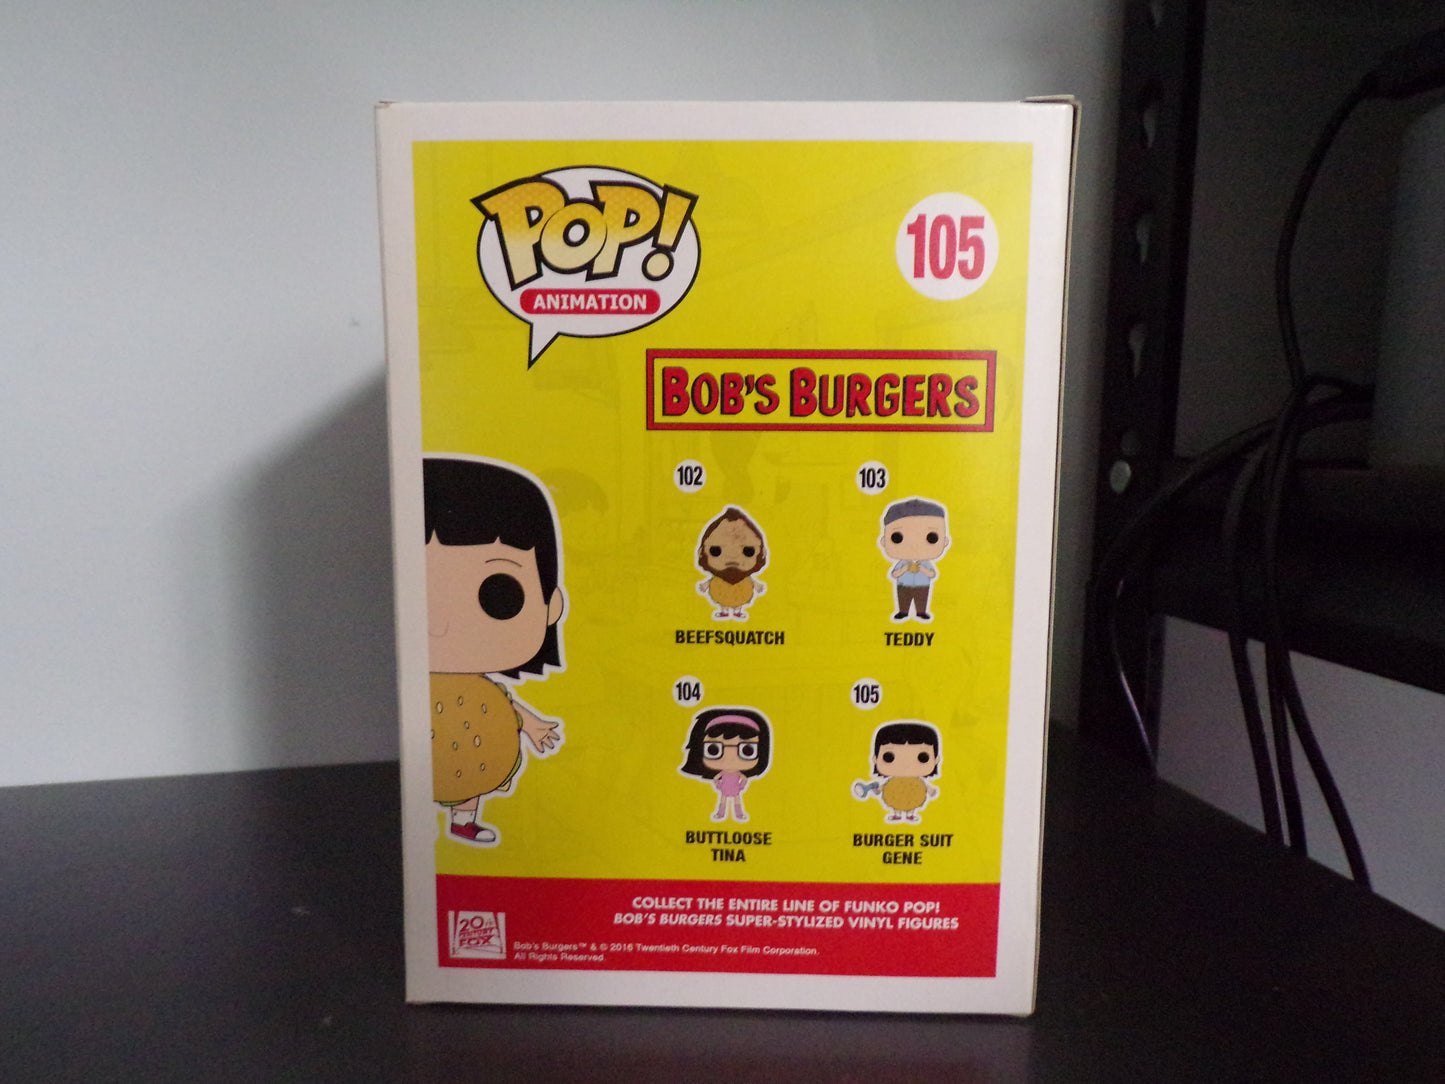 Funko Pop! Bob's Burgers - Burger Suit Gene Hot Topic Exclusive #105